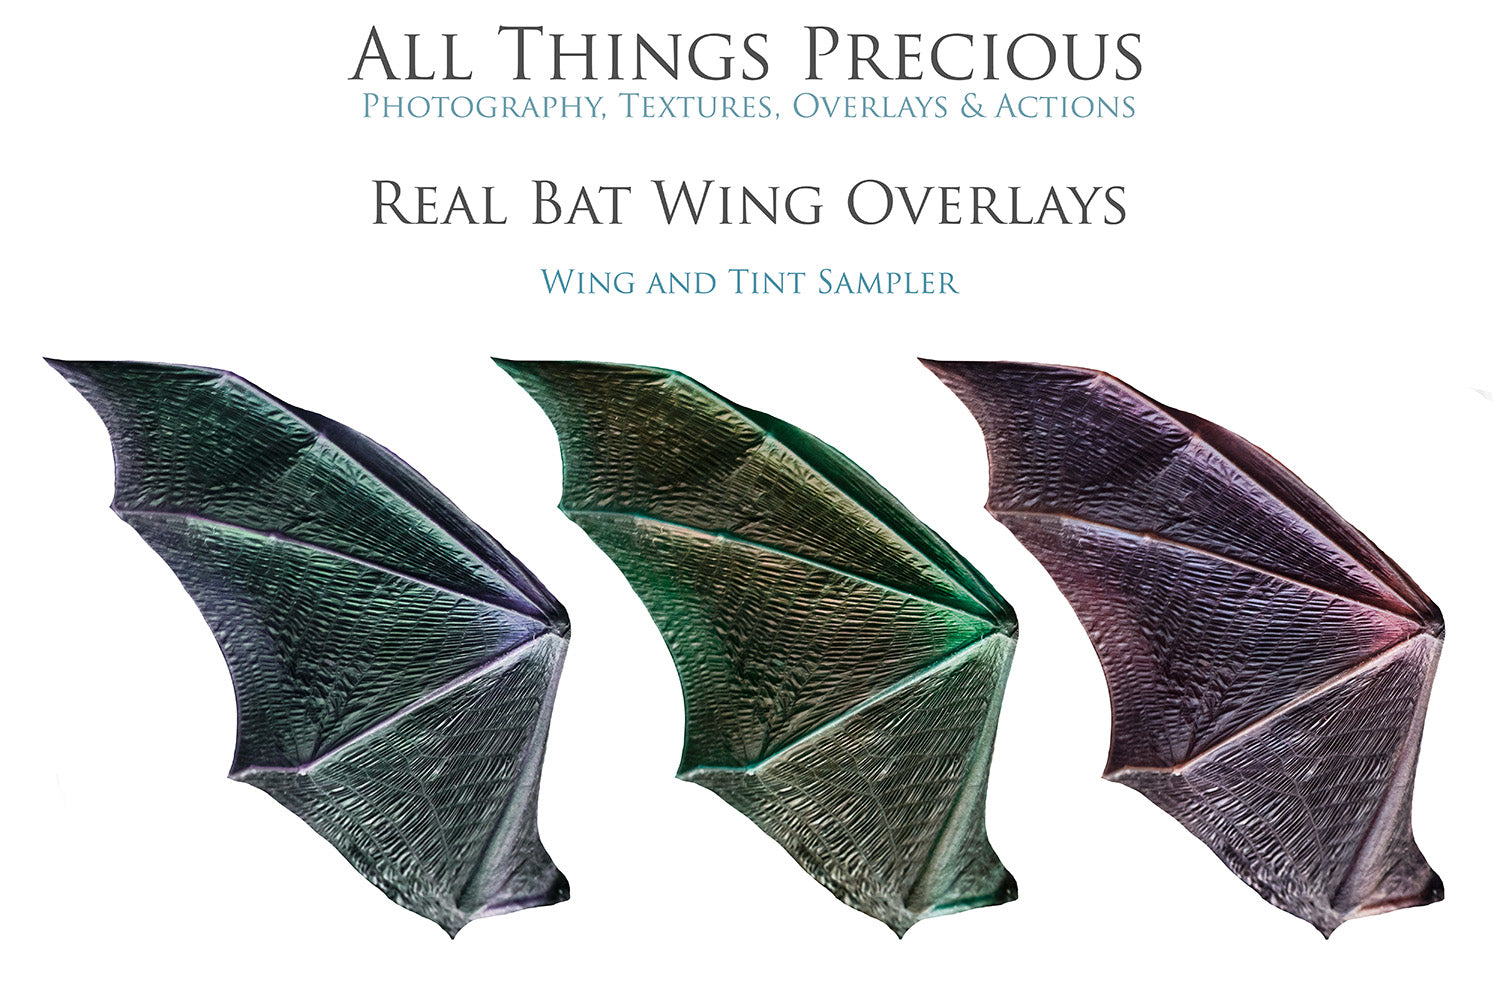 folded bat wings